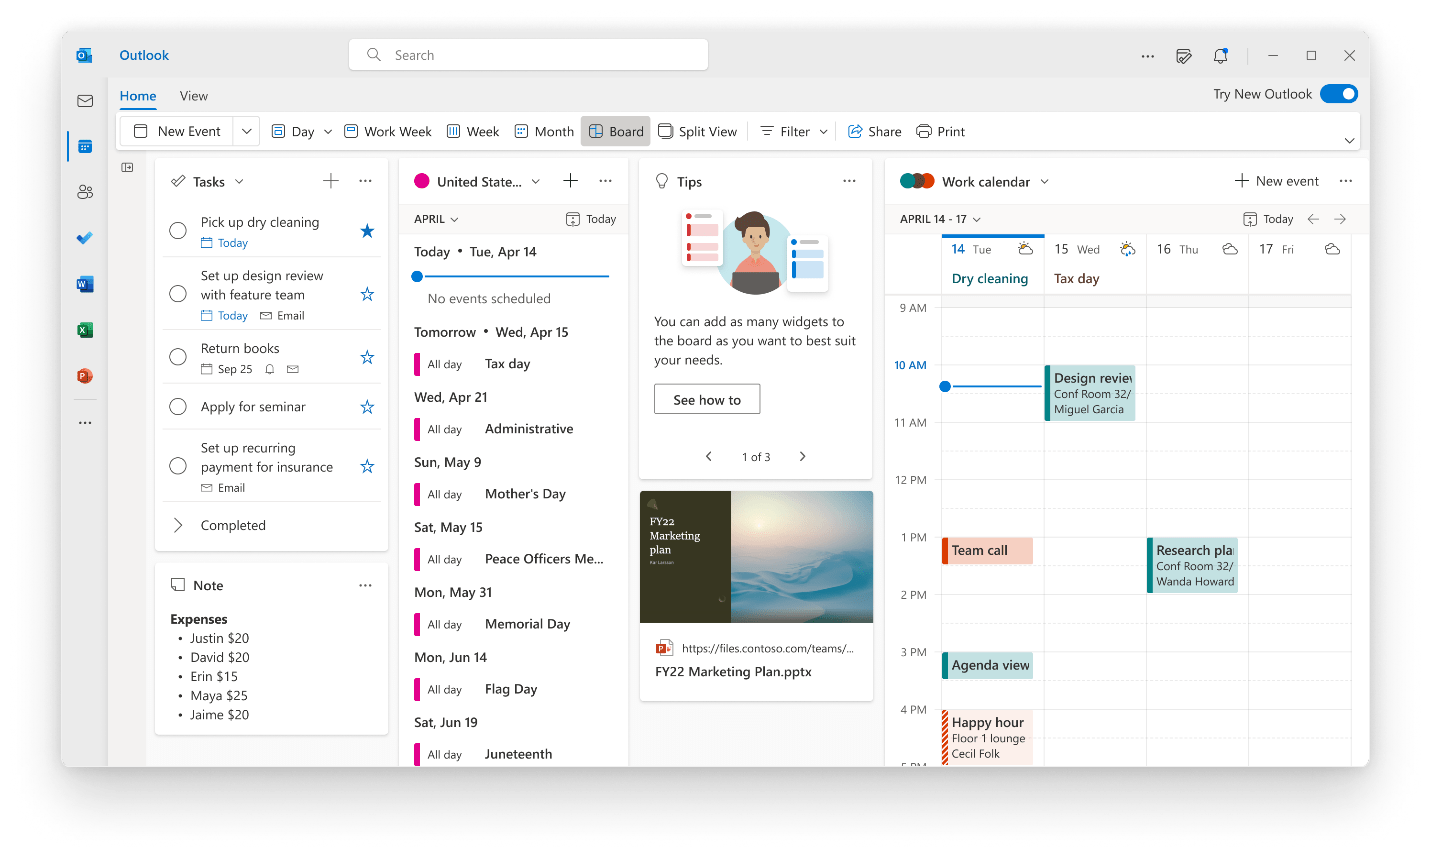 Outlook calendar board view